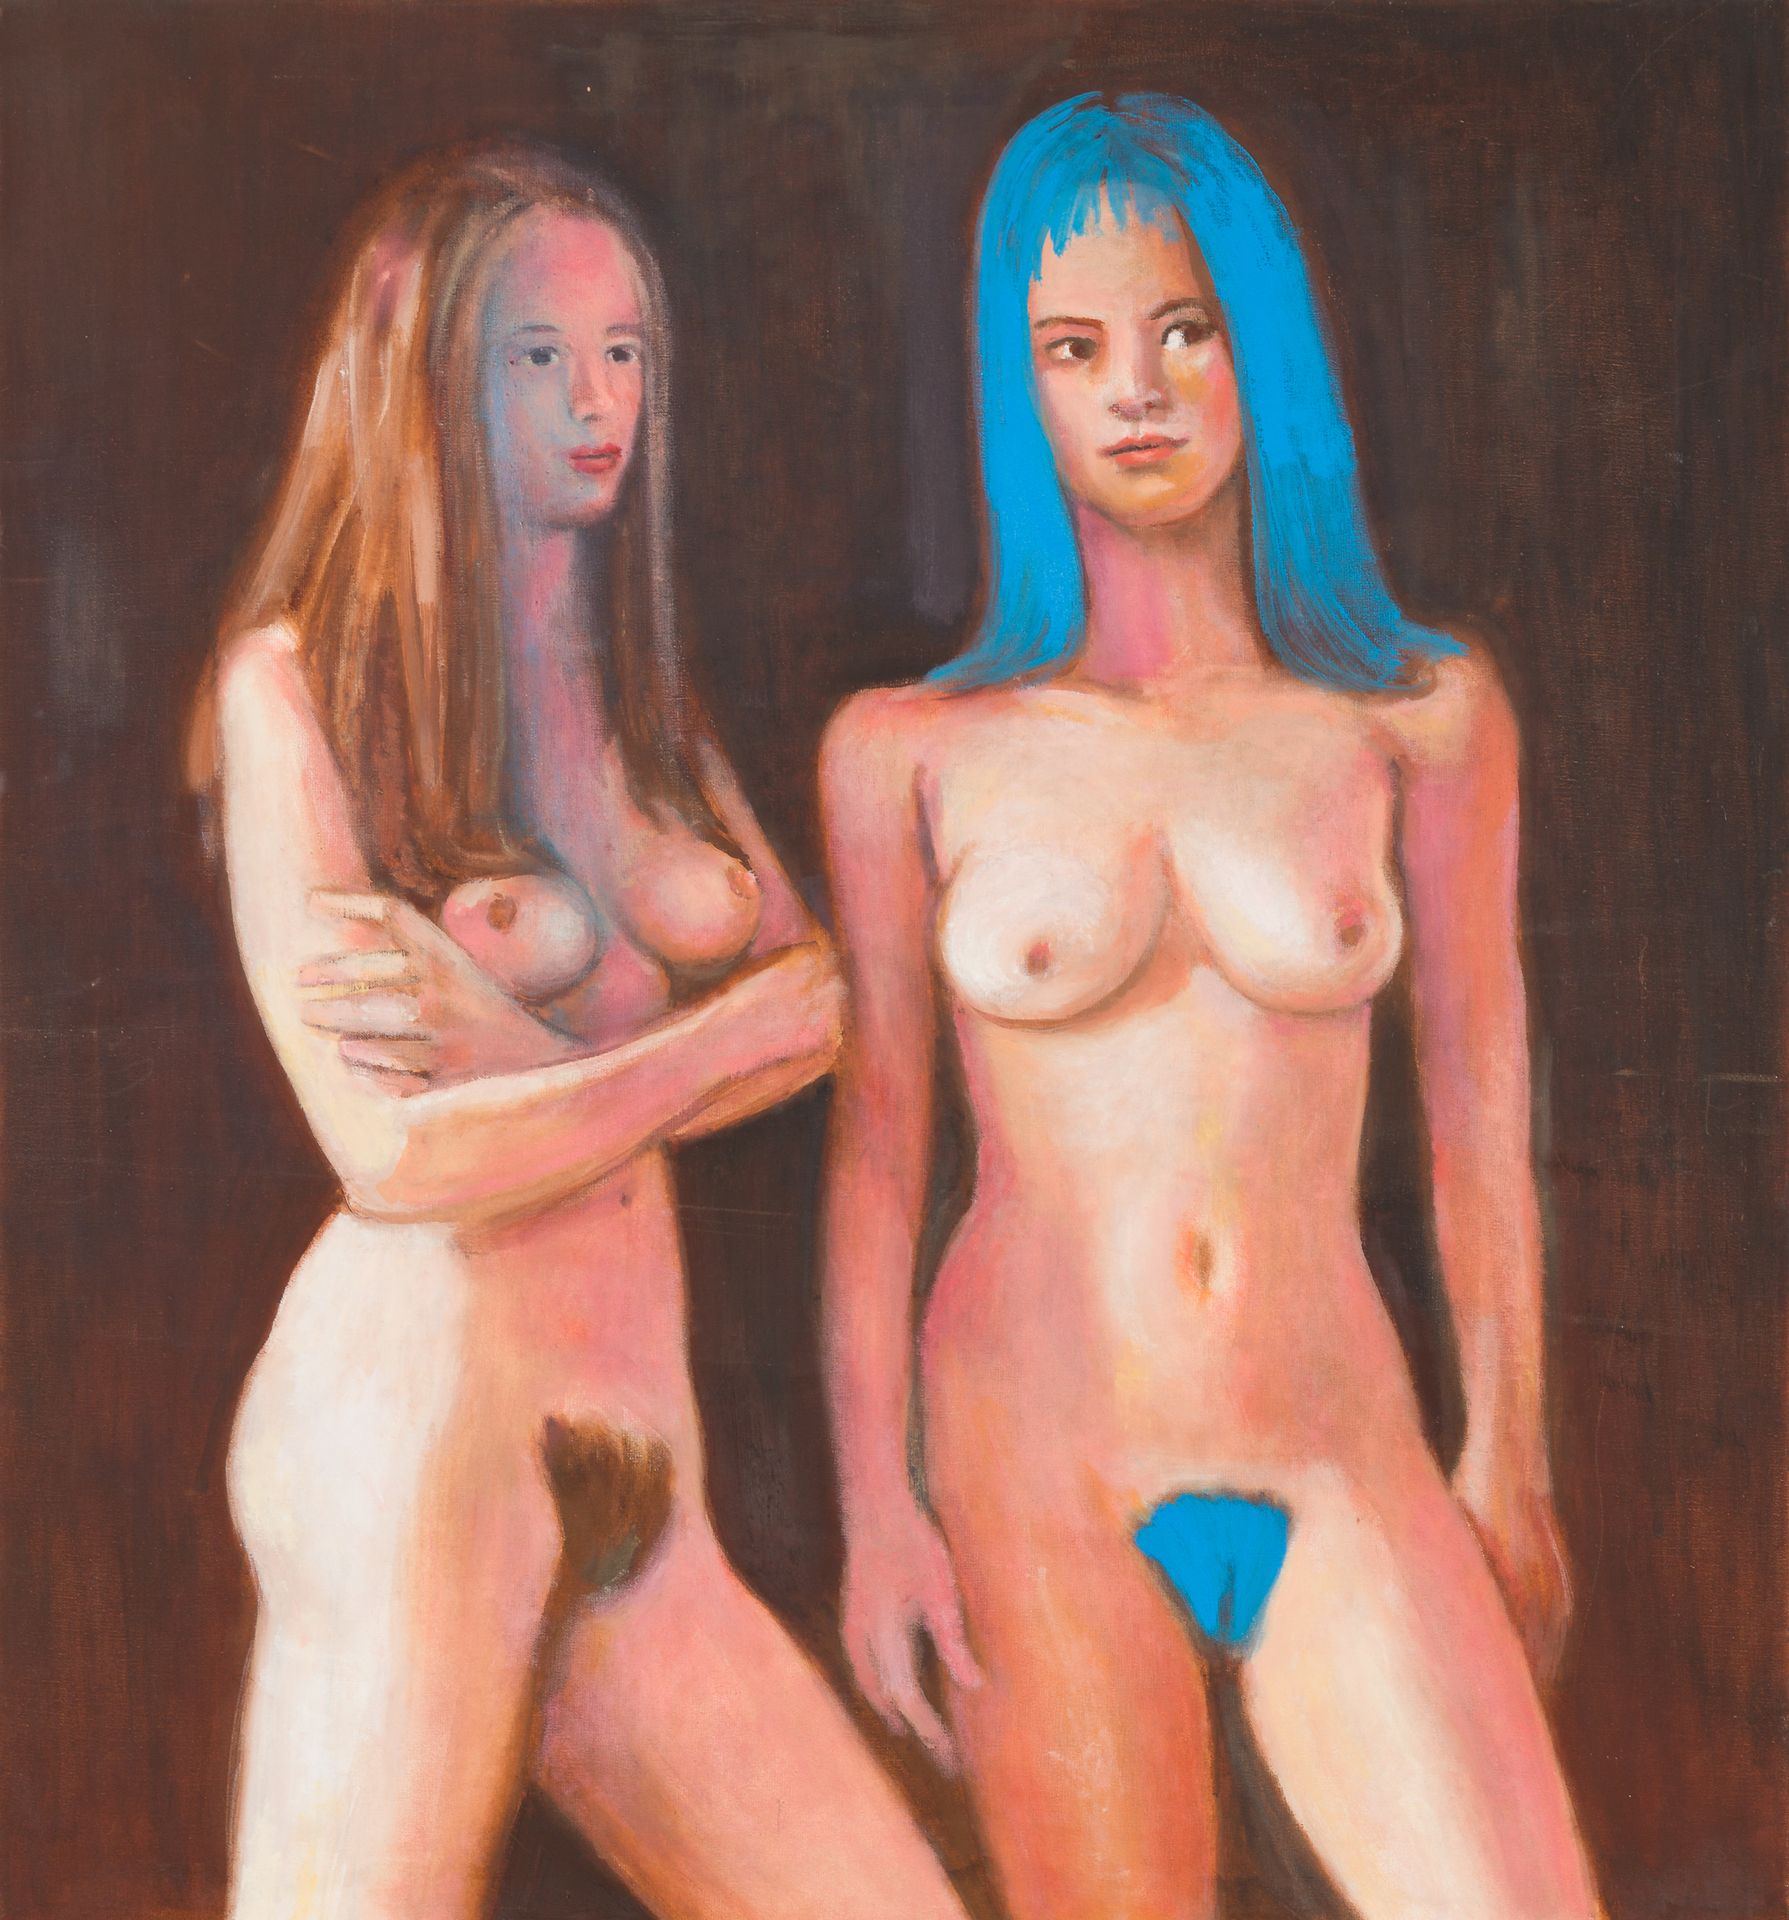 Guglielmino, Roberto Two nudes 
Oil on canvas

65 x 60 cm